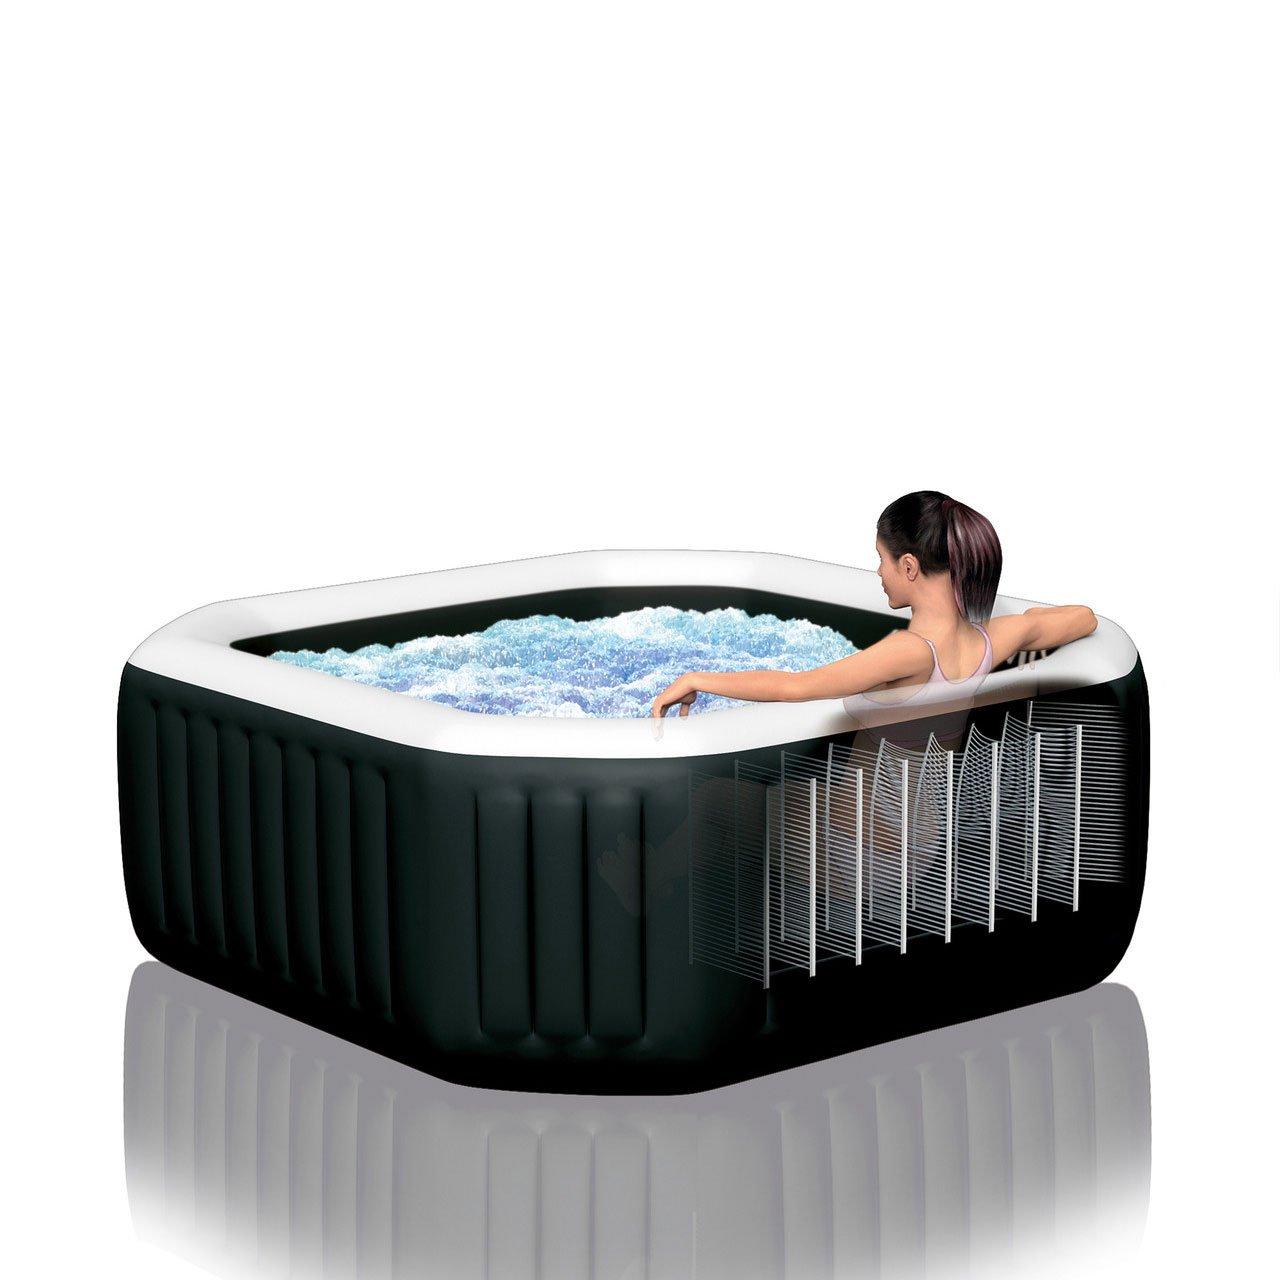 INTEX Inflatable Hot Tubs